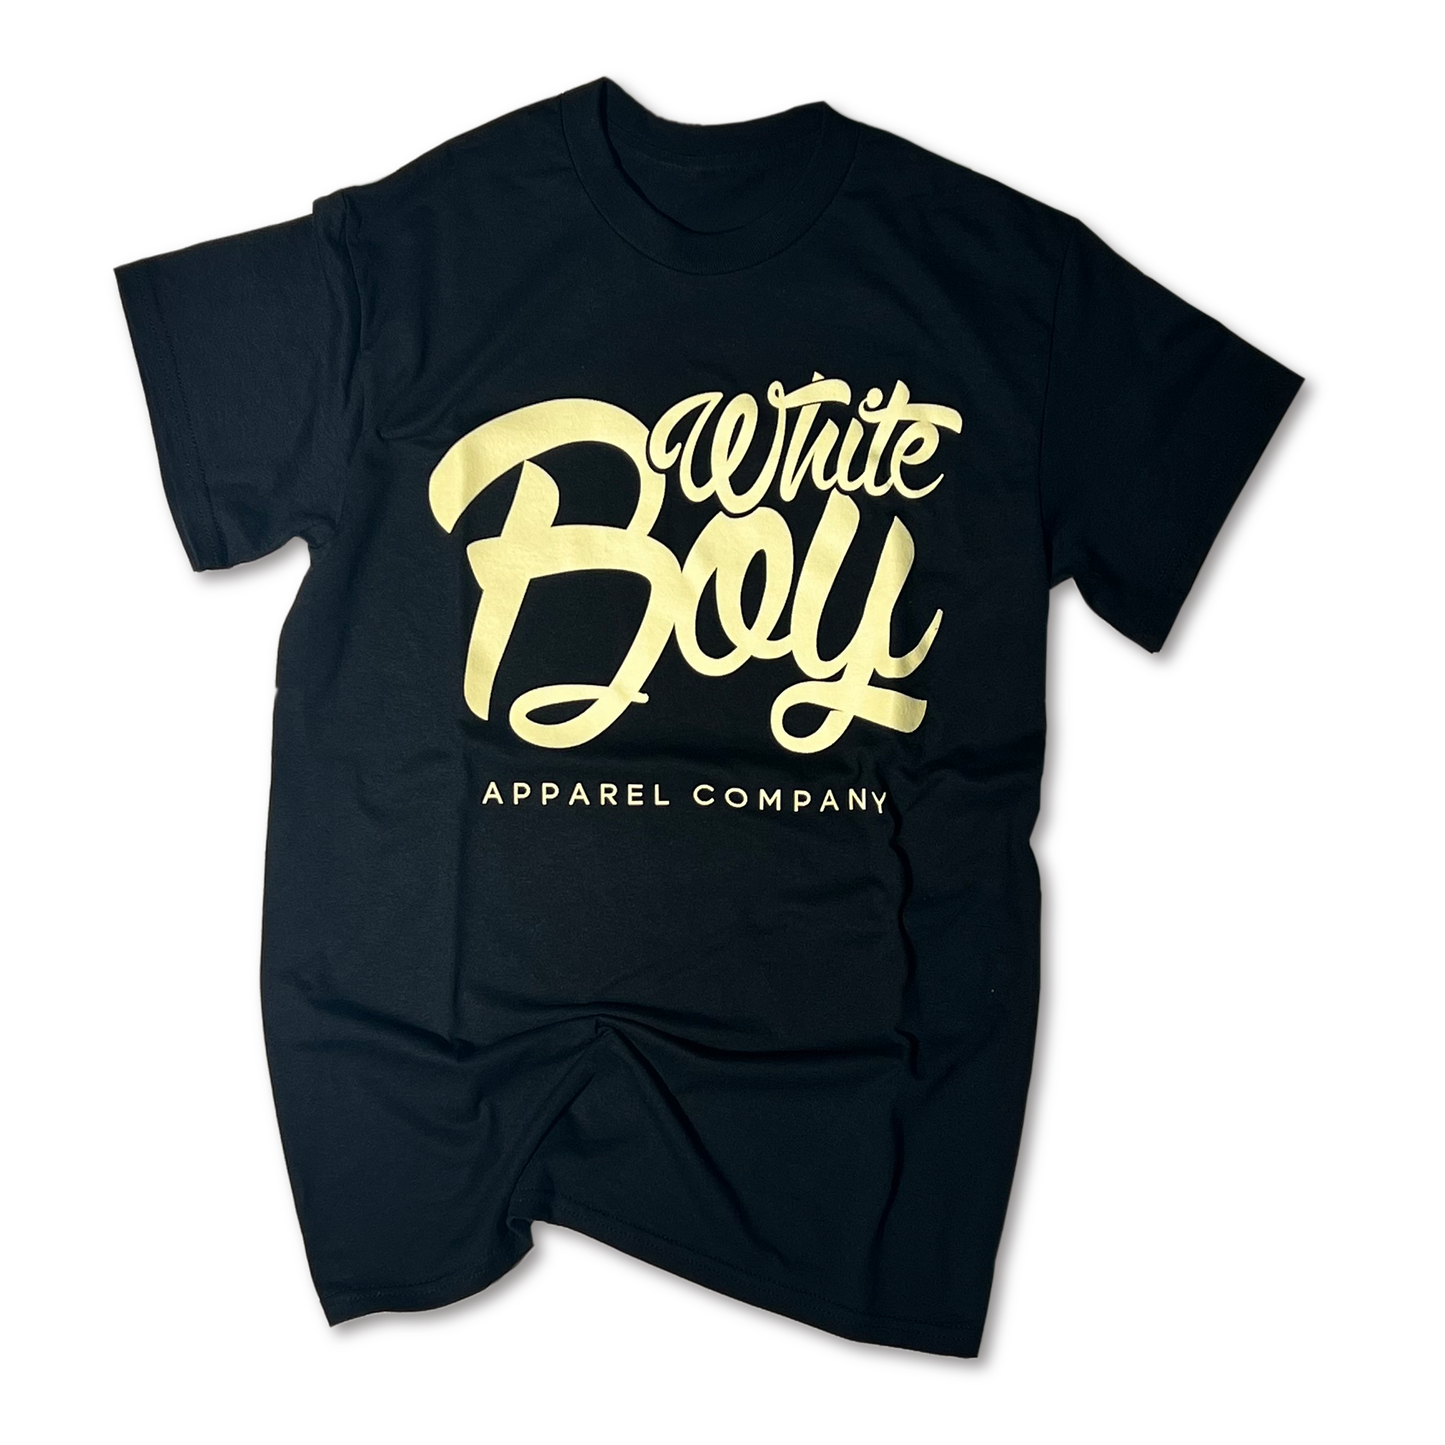 White Boy Apparel Company T-shirt